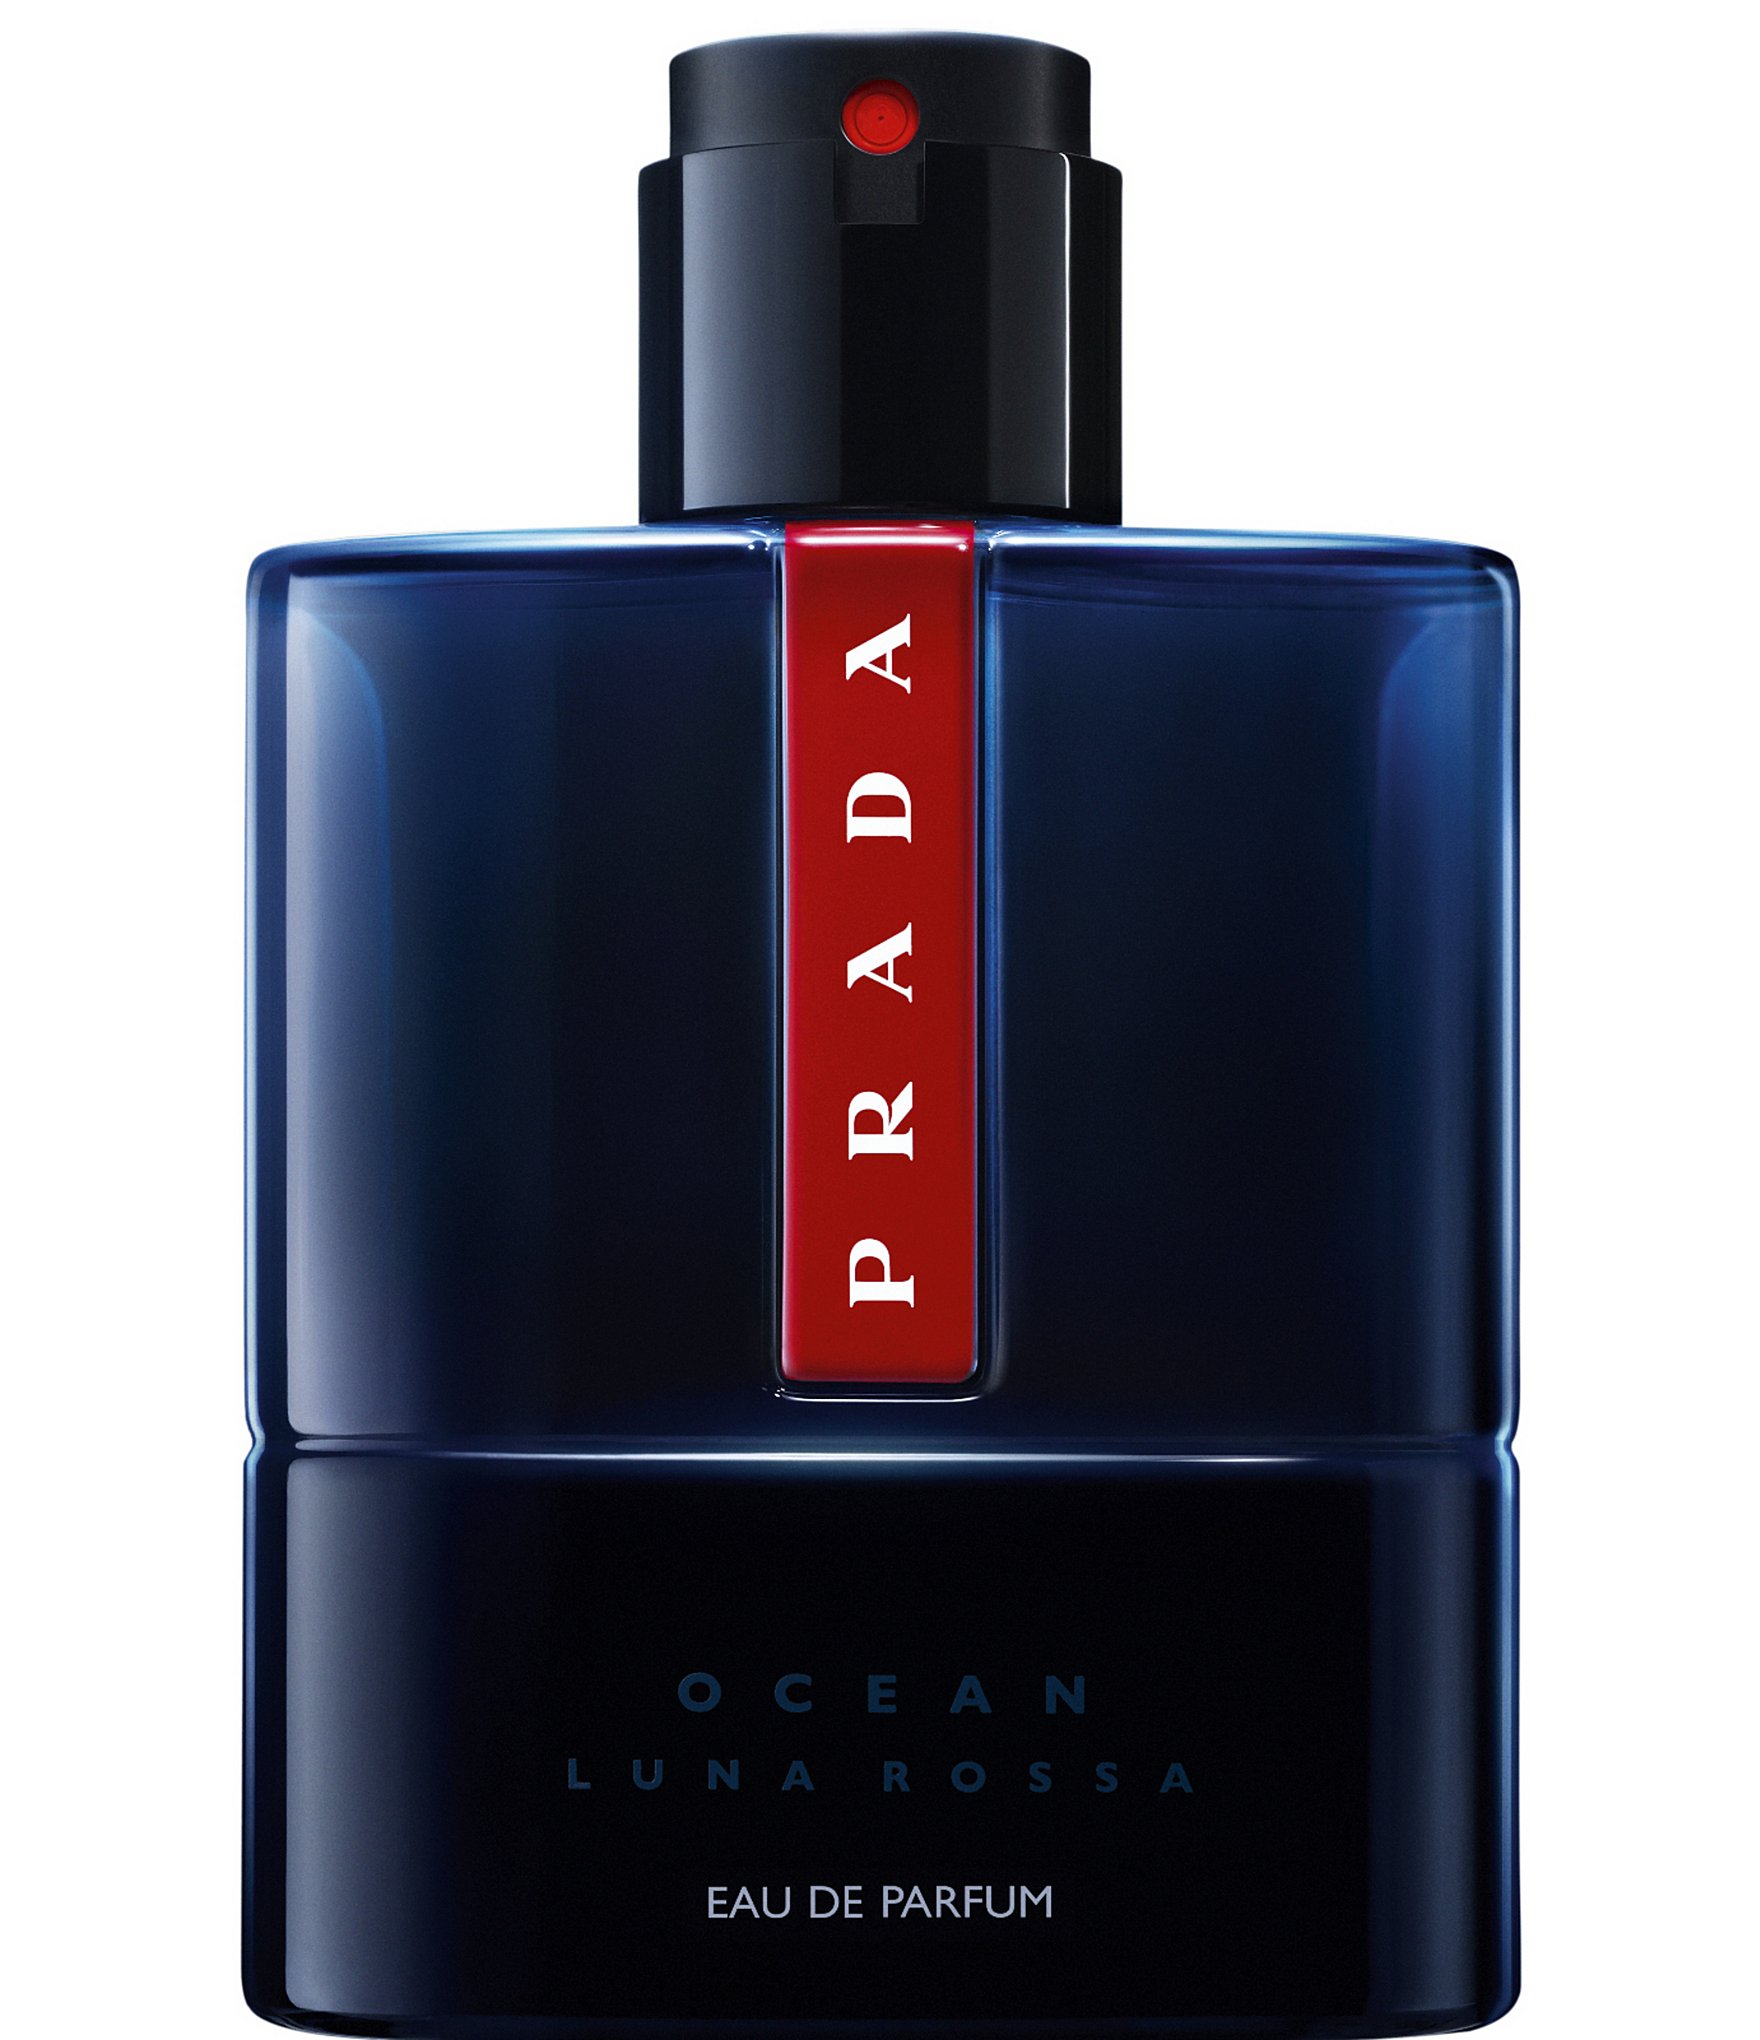 Productie ritme half acht Prada Luna Rossa Ocean Eau de Parfum for Men | Dillard's